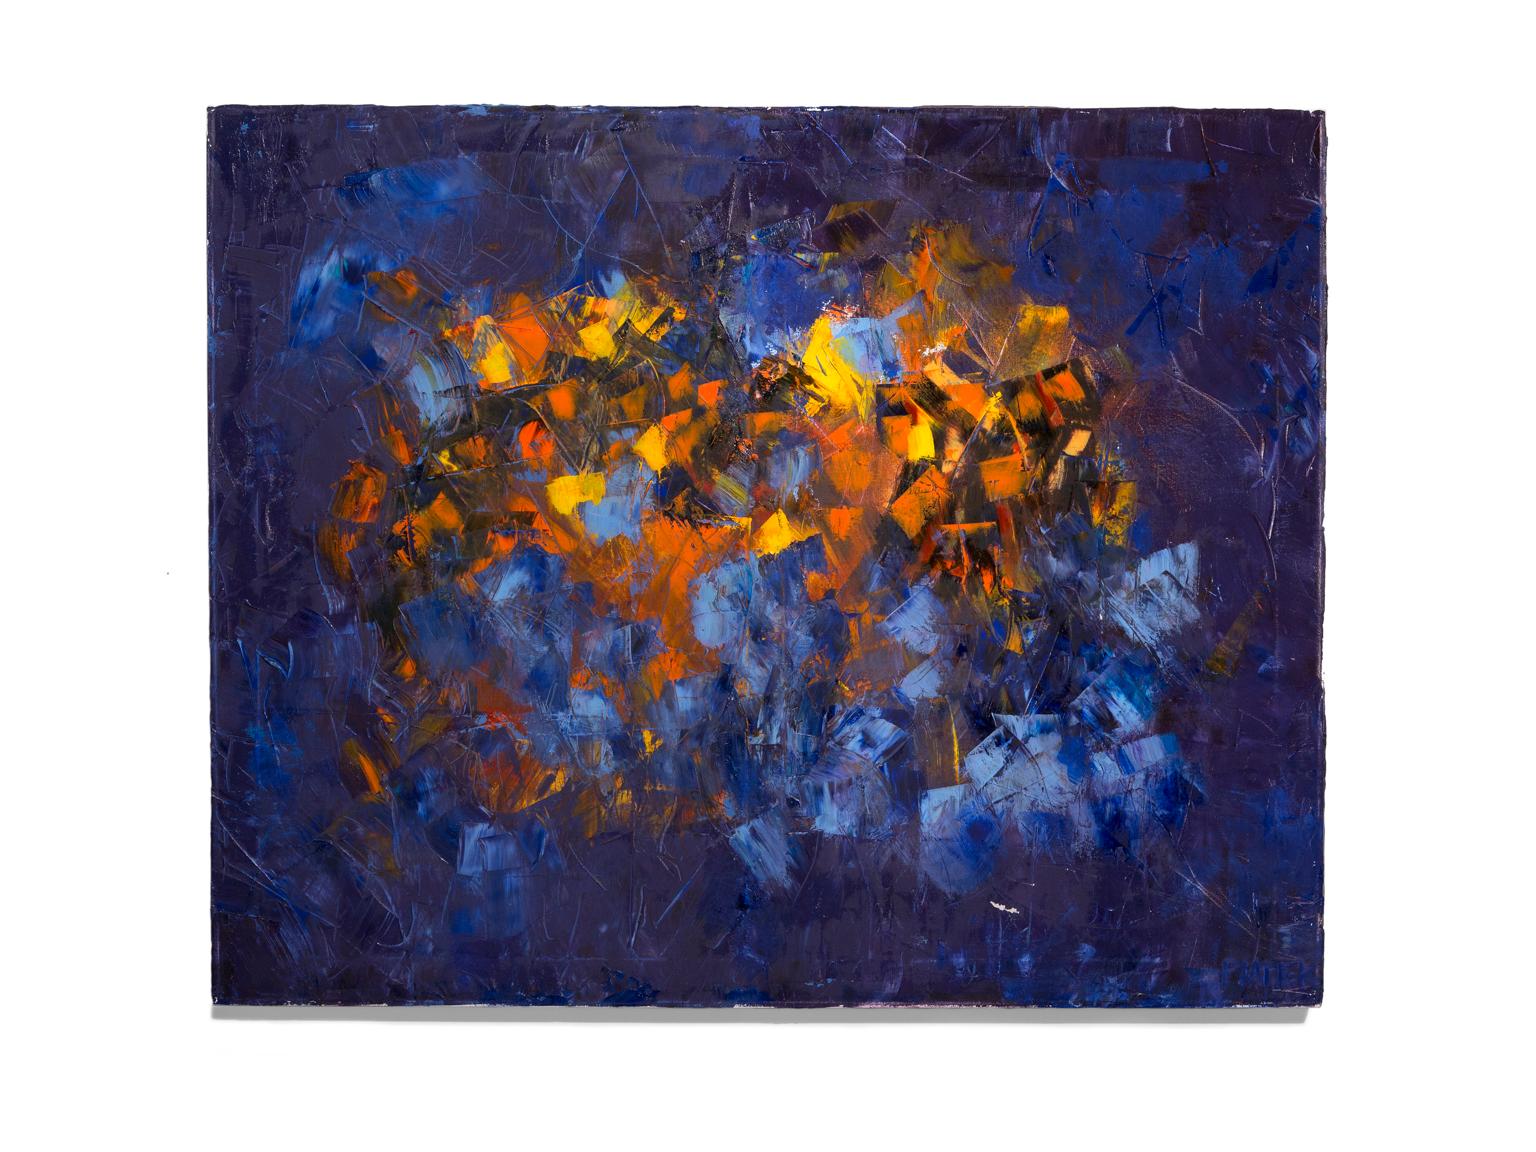 Abstract Painting Robert Piatek - « In the Beginning », abstrait, couleurs brillantes de bleu, rouge, jaune, huile